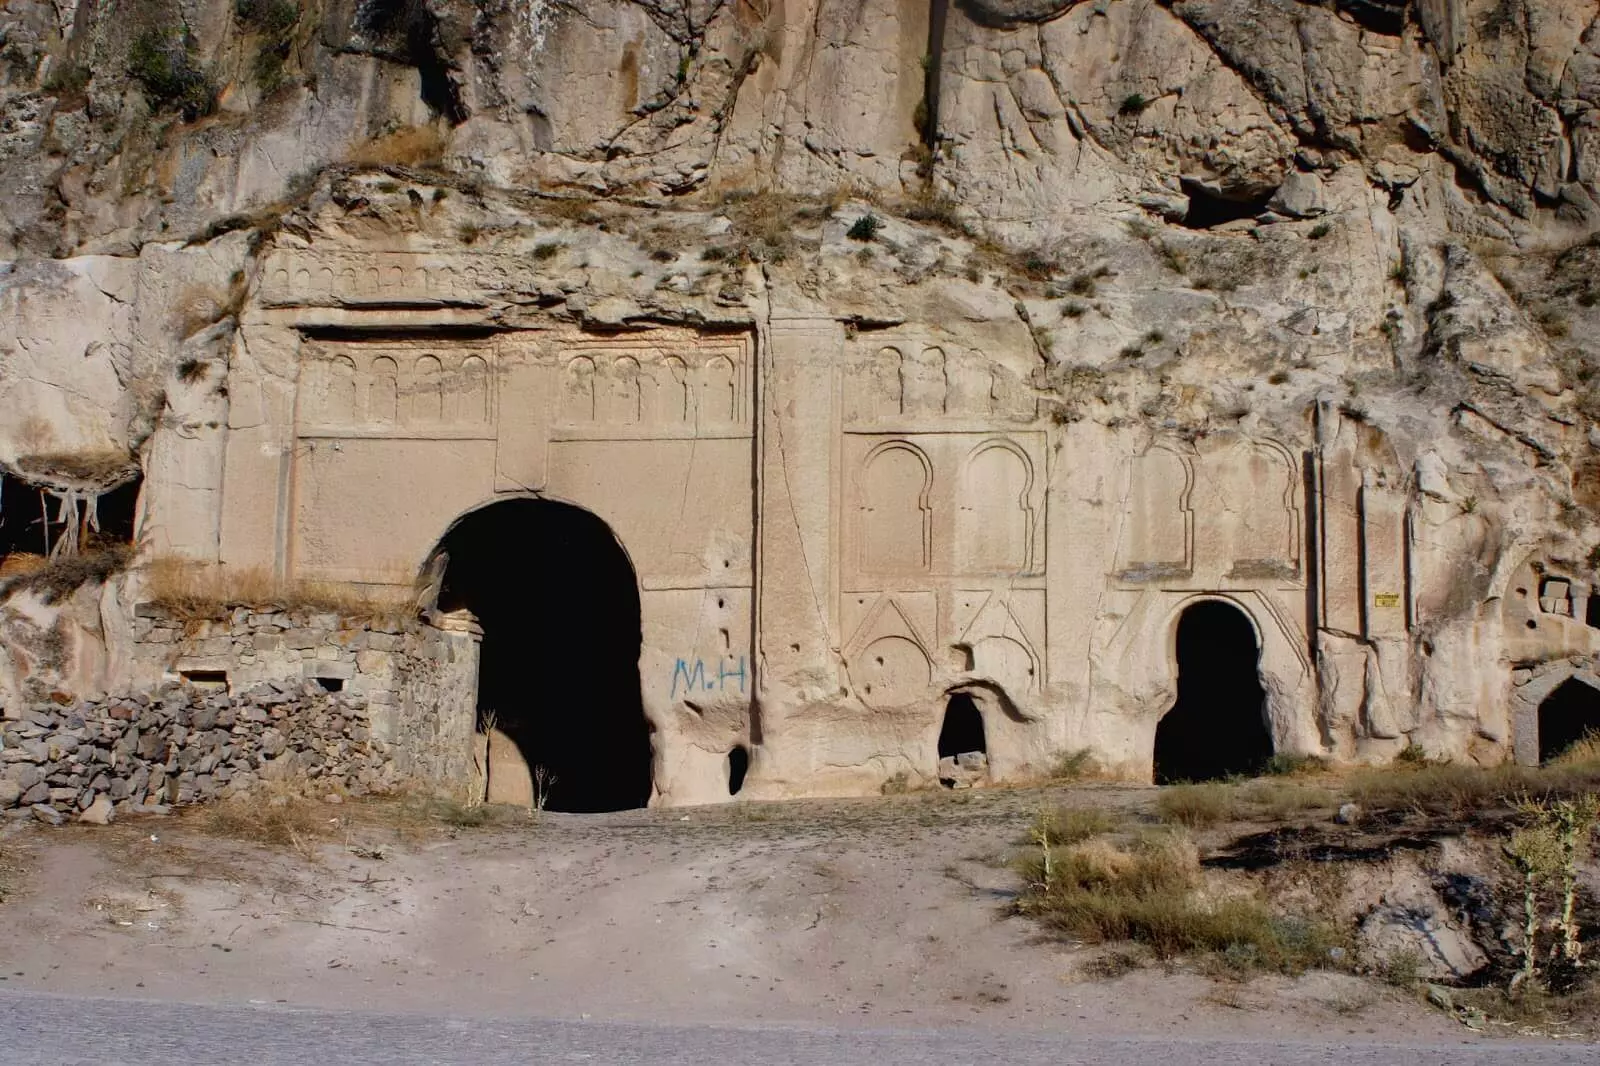 Direkli Church in Belisırma Village / Cappadocia